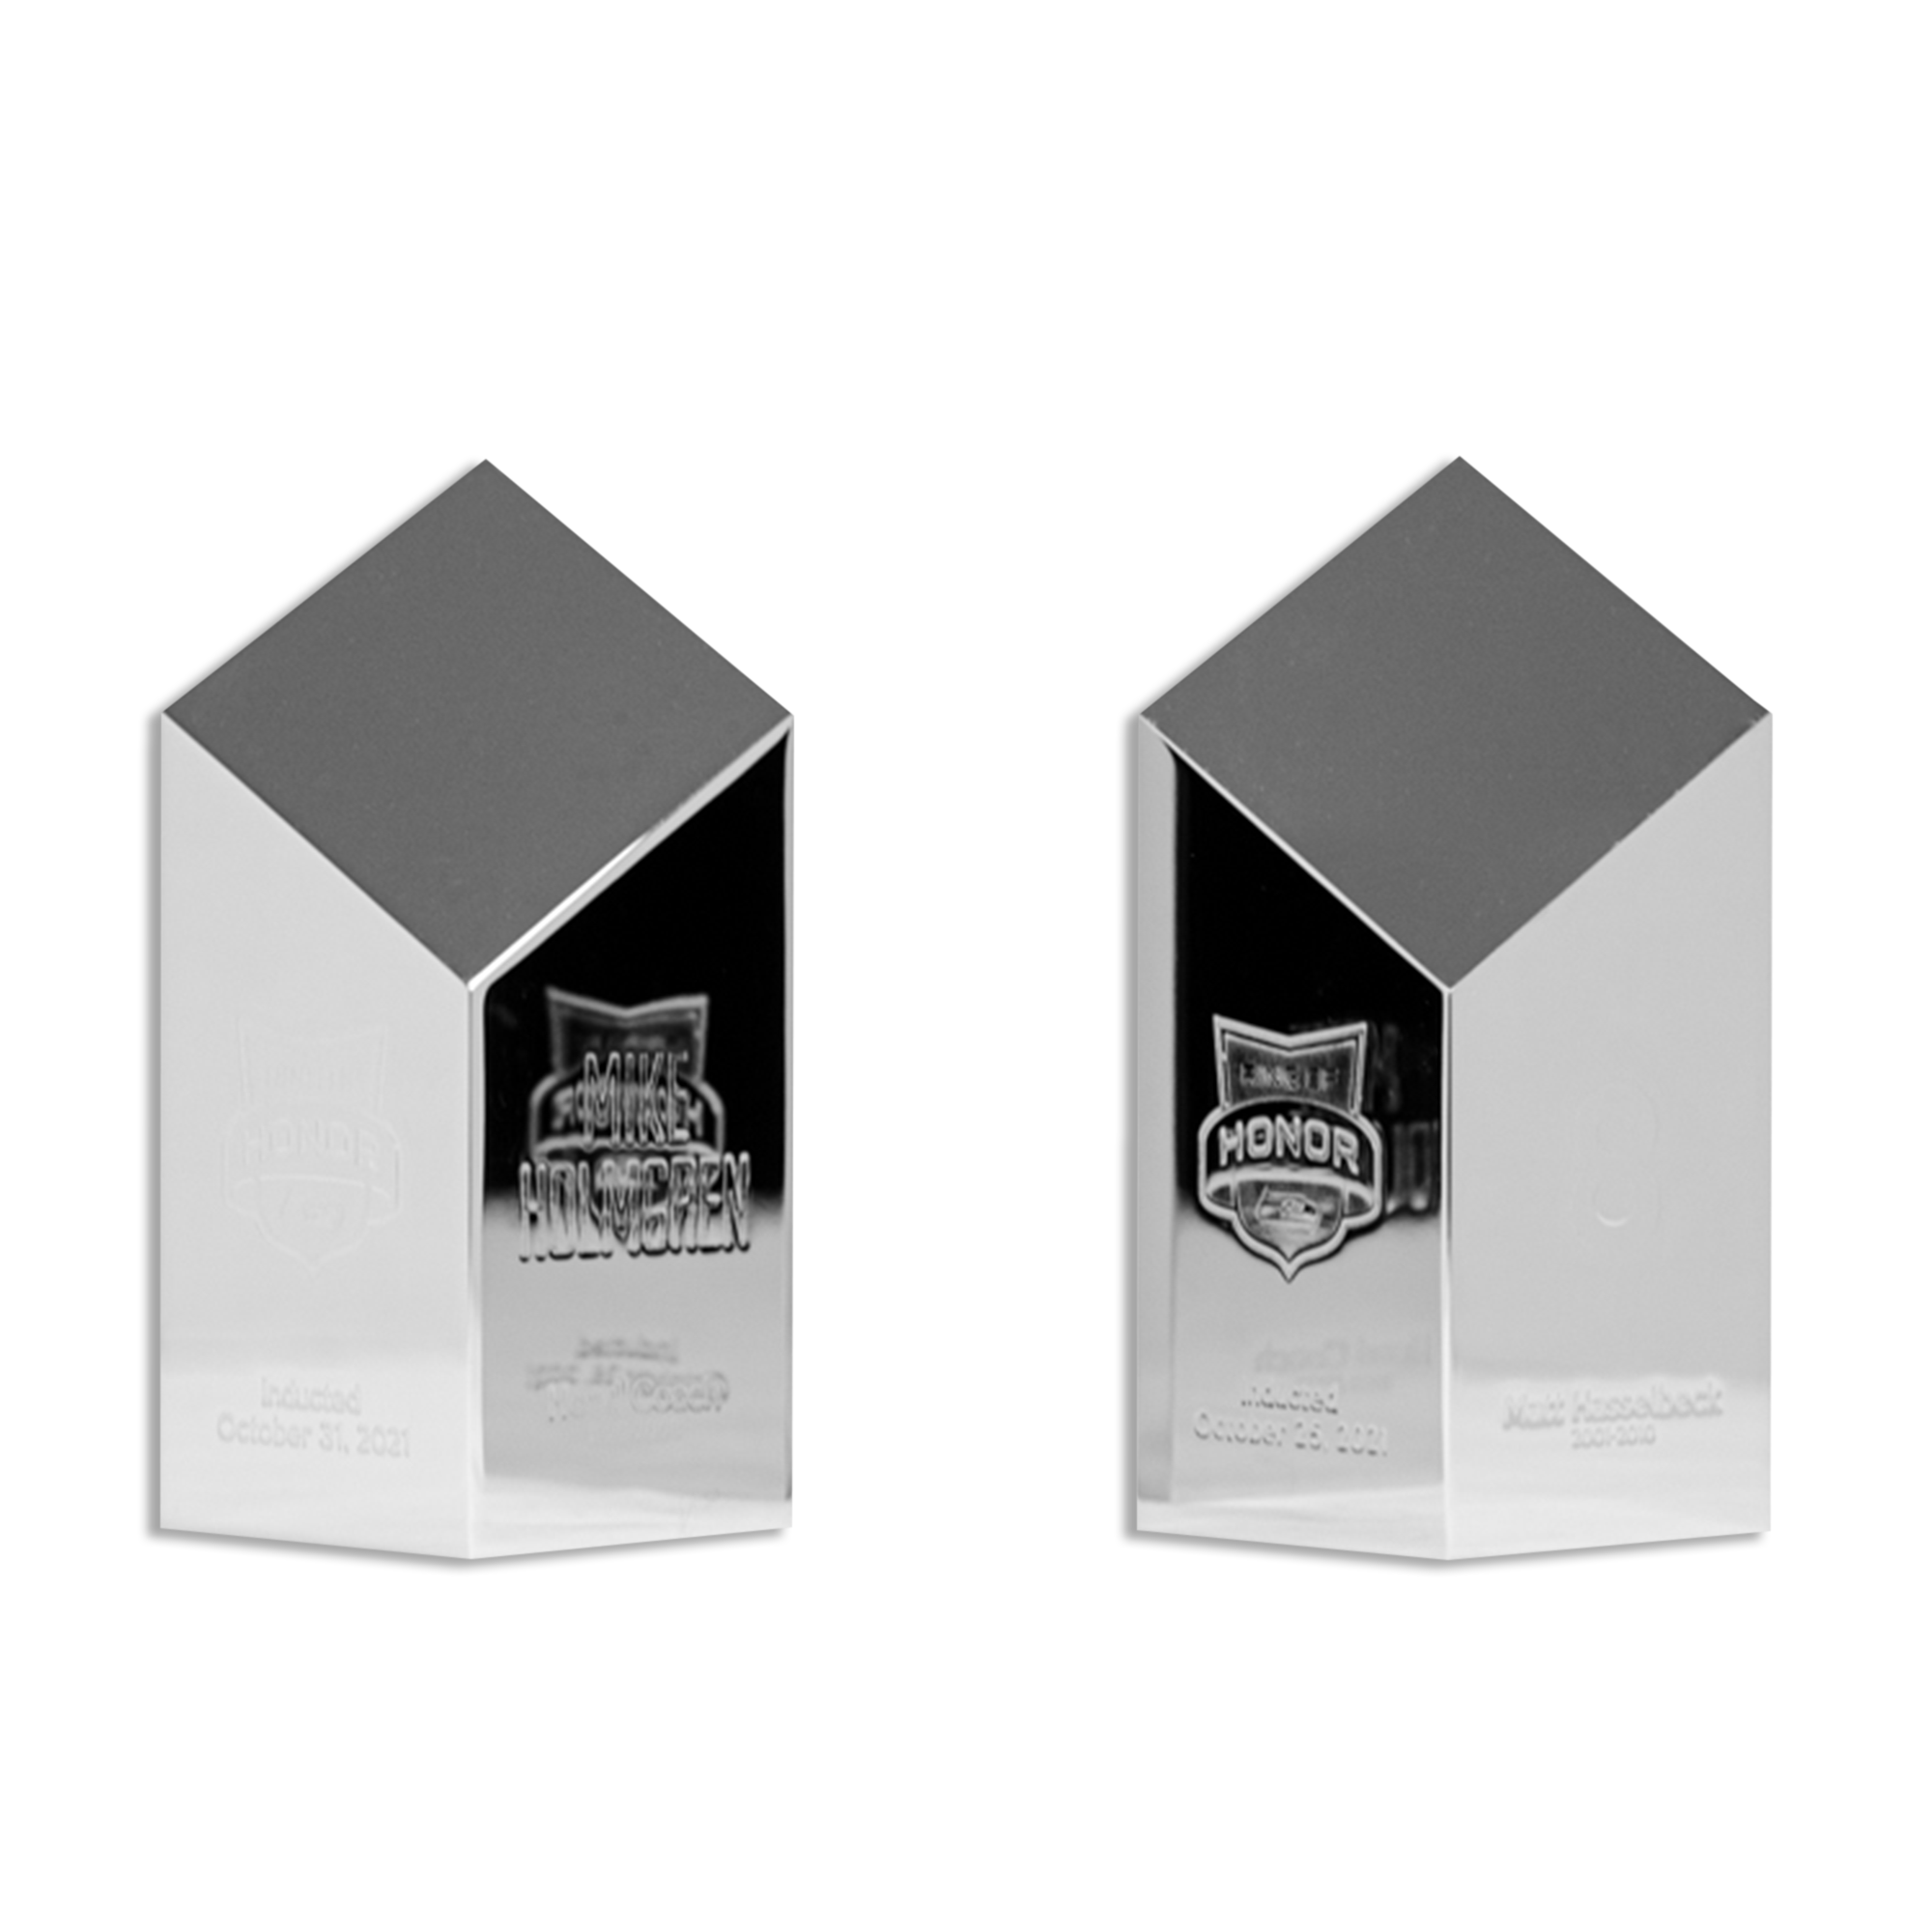 Custom fabricated awards